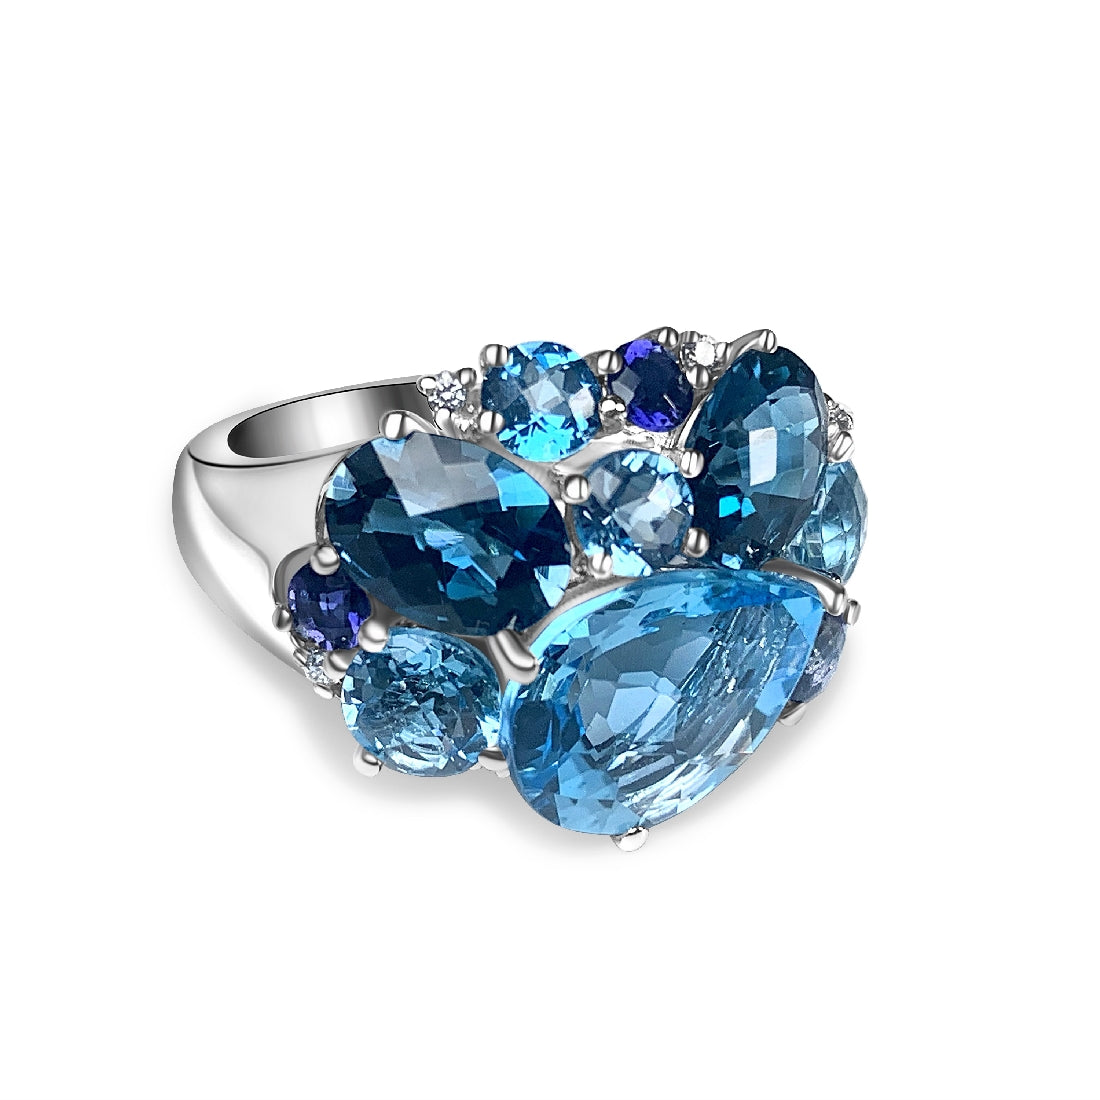 18kt White Gold cluster Blue Topaz, Iolite and Diamond ring - Masterpiece Jewellery Opal & Gems Sydney Australia | Online Shop